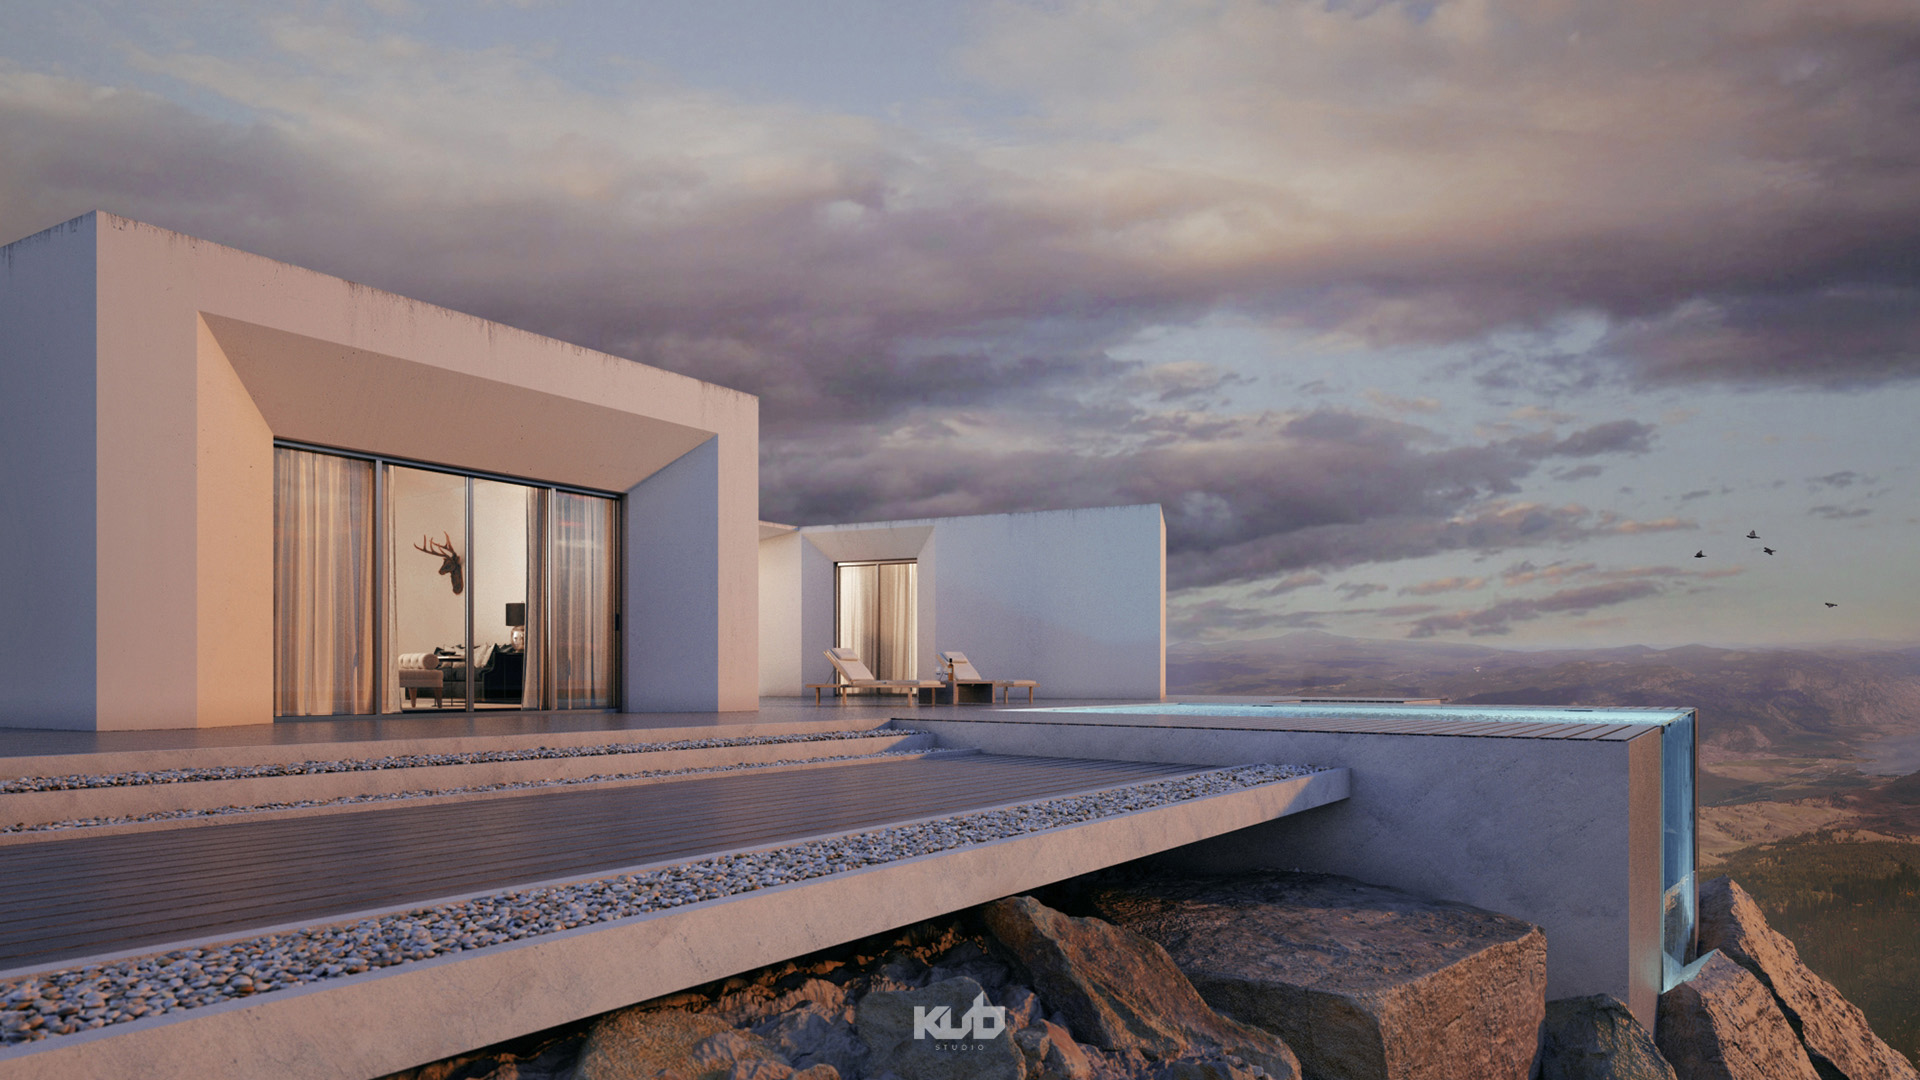 Living Space: Minimalist Architecture 3D Home - KUB Studio